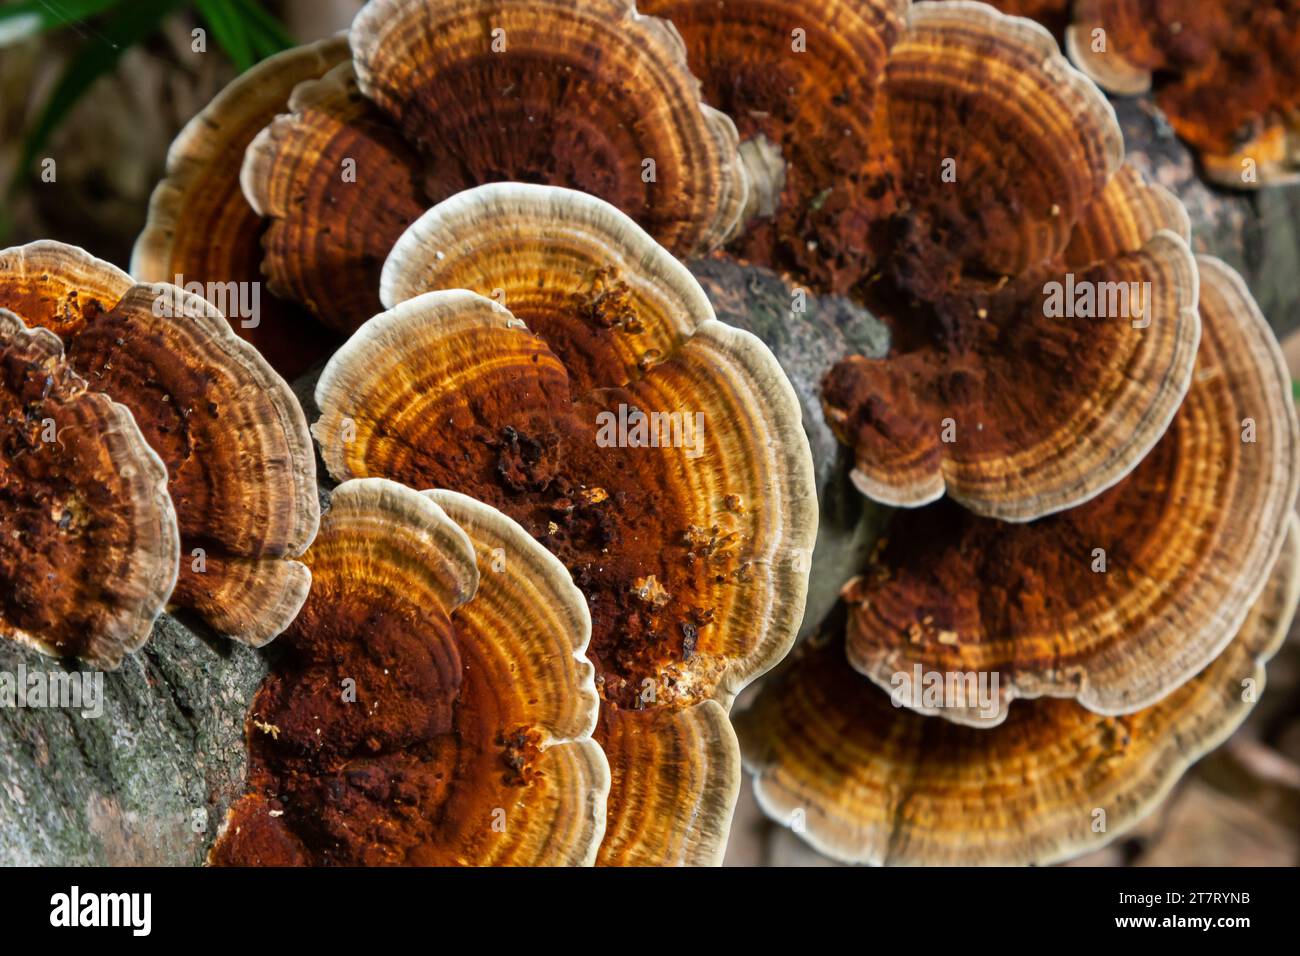 Anise mazegill, a brown rot fungus, Gloeophyllum odoratum. Stock Photo